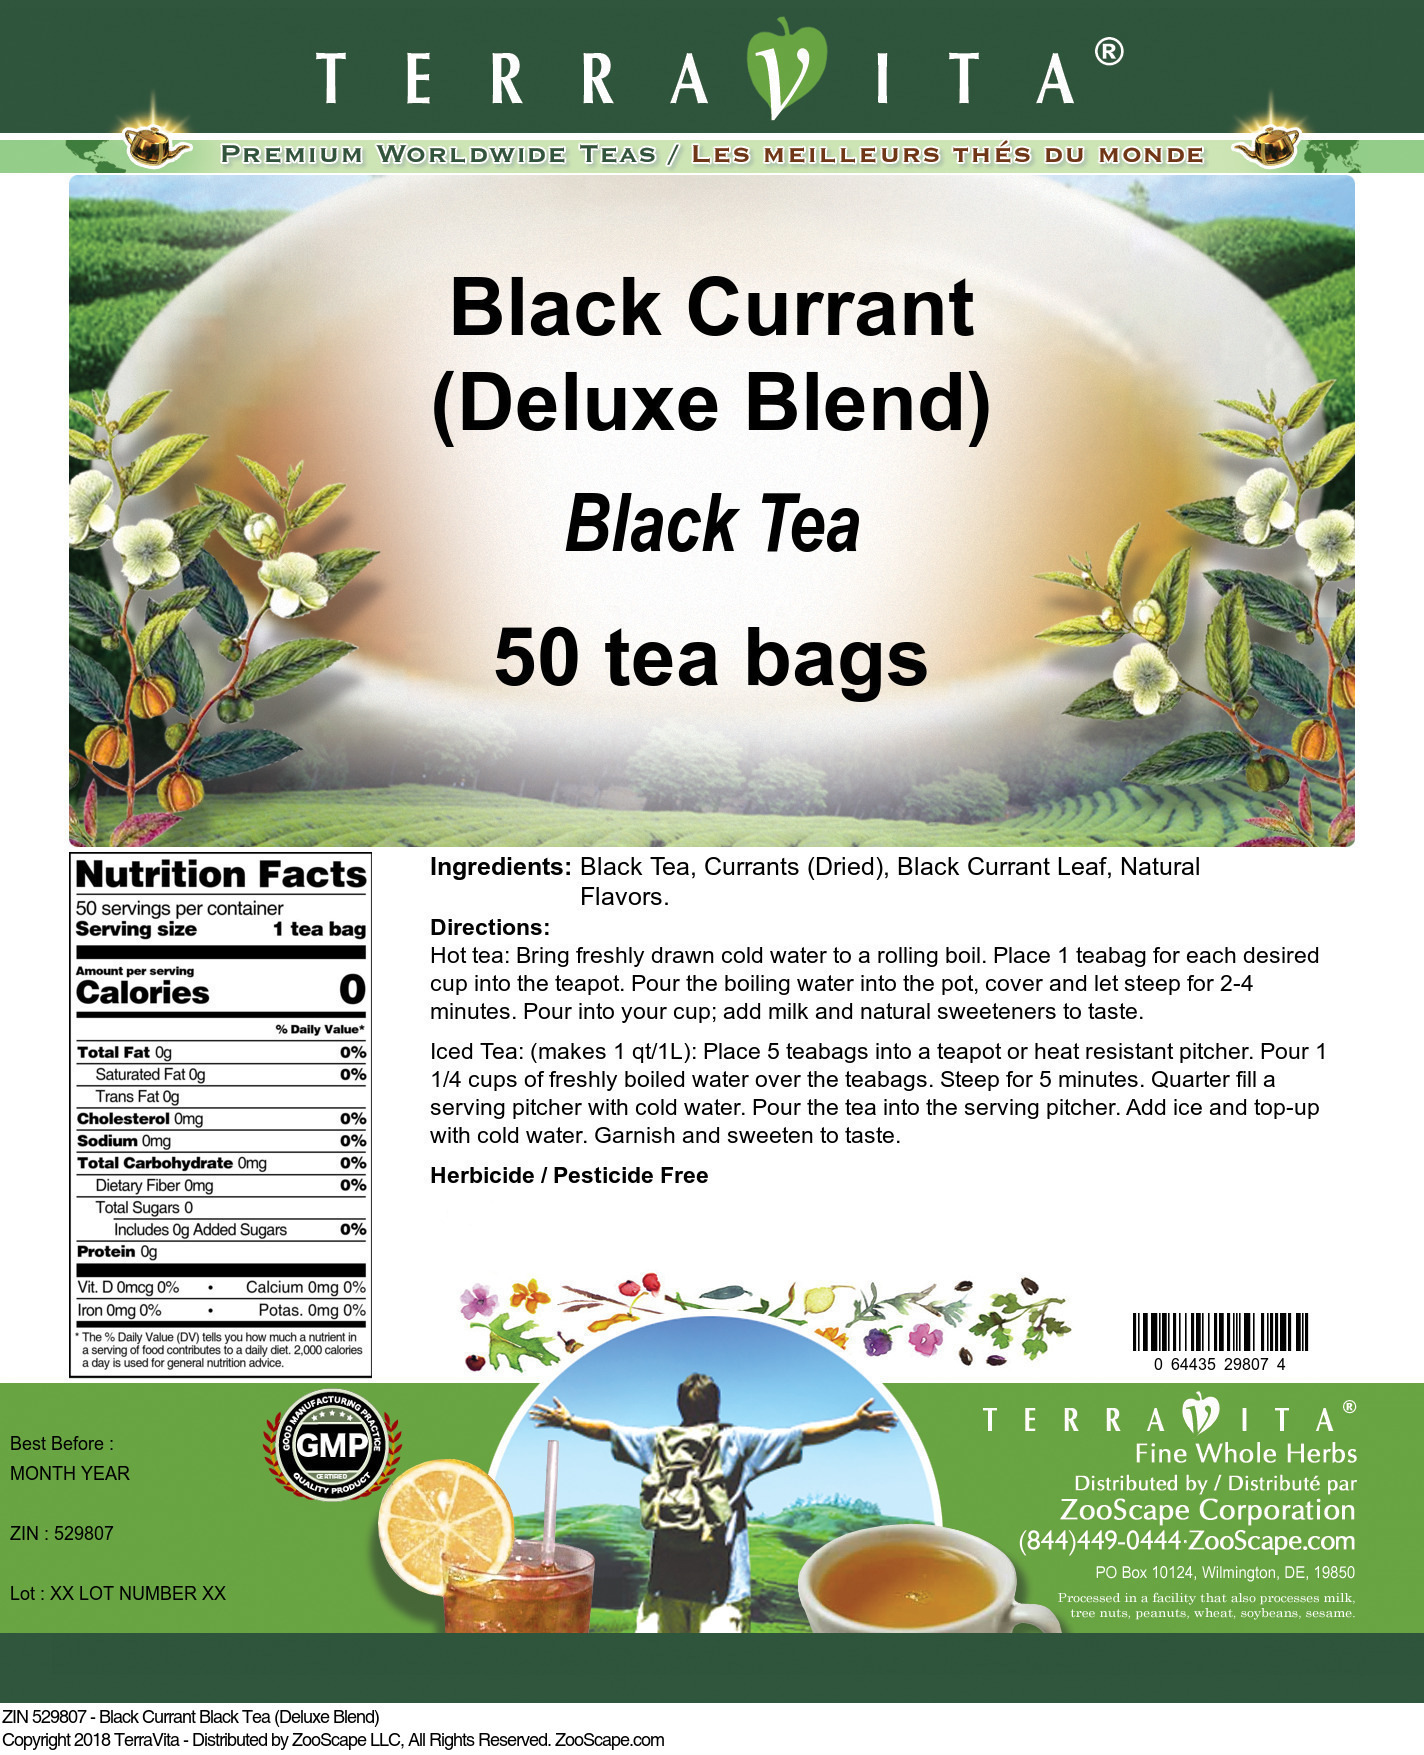 Black Currant Black Tea (Deluxe Blend) - Label